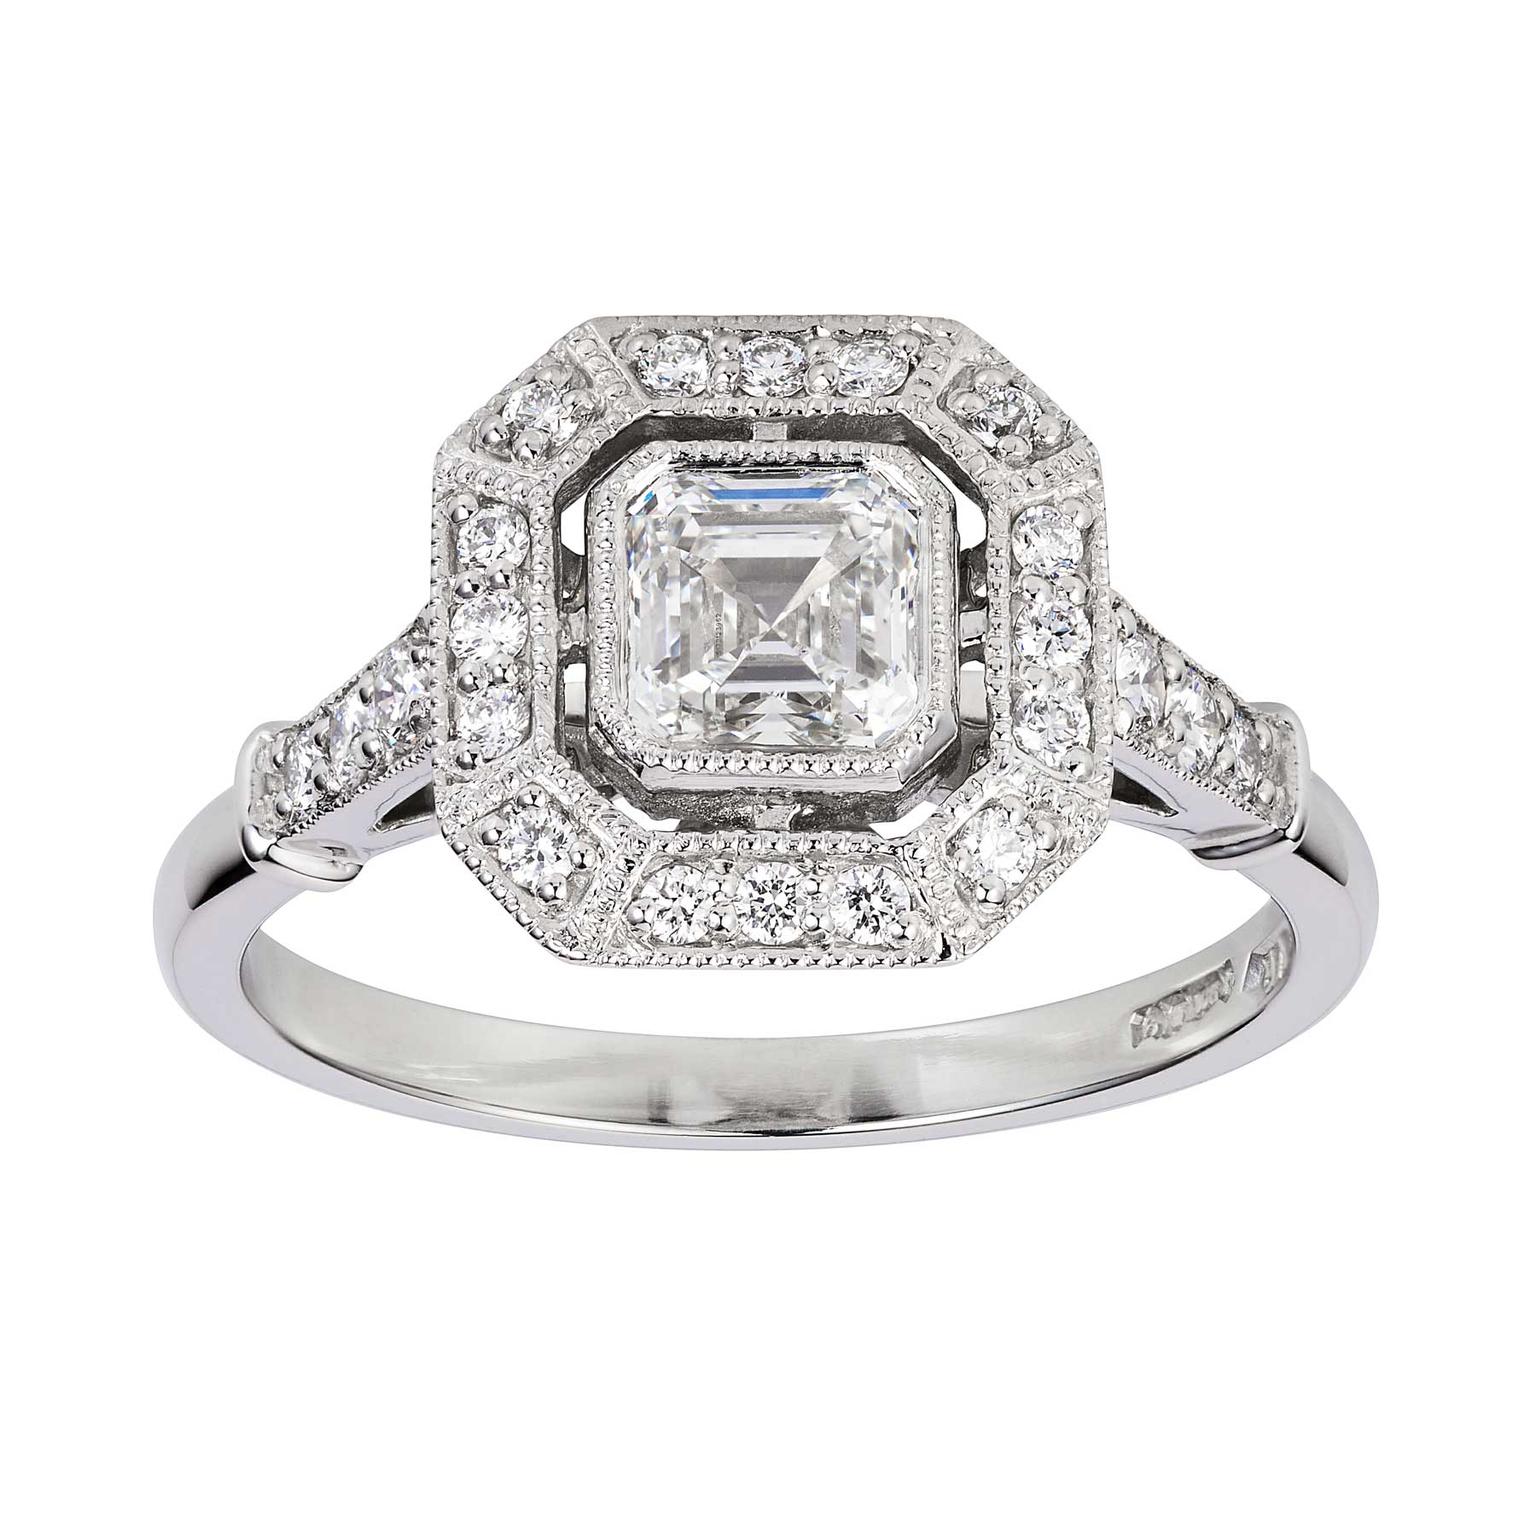 London Victorian Ring Company Art Deco Asscher-cut diamond ring